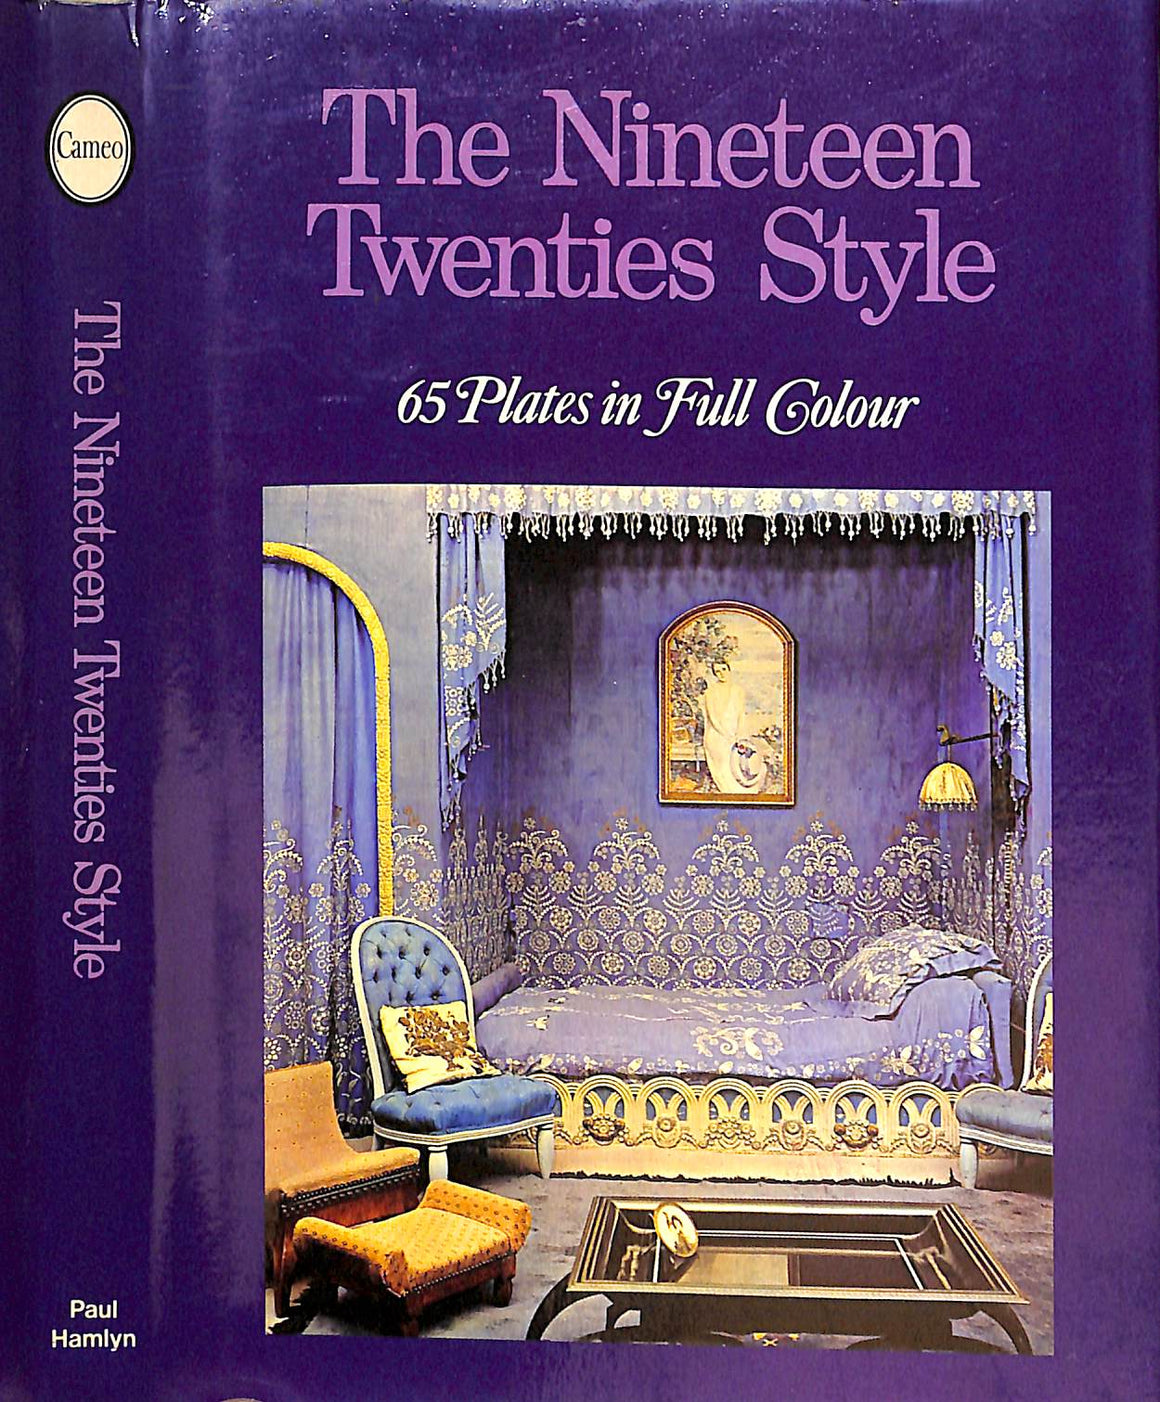 "The Nineteen Twenties Style" 1969 BRUNHAMMER, Yvonne